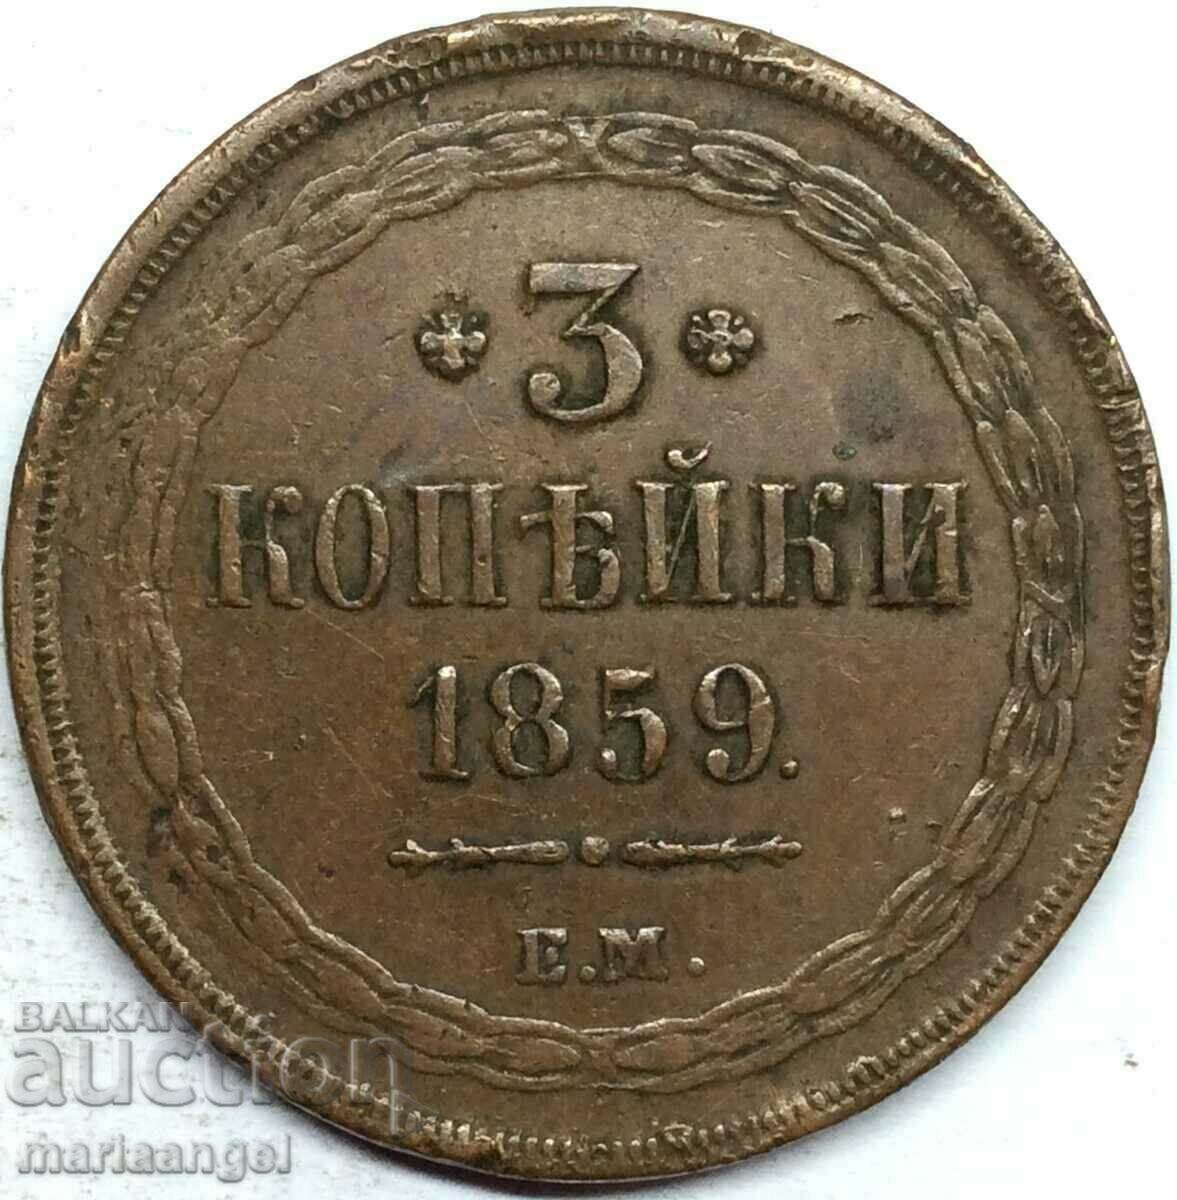 3 kopecks 1859 Russia